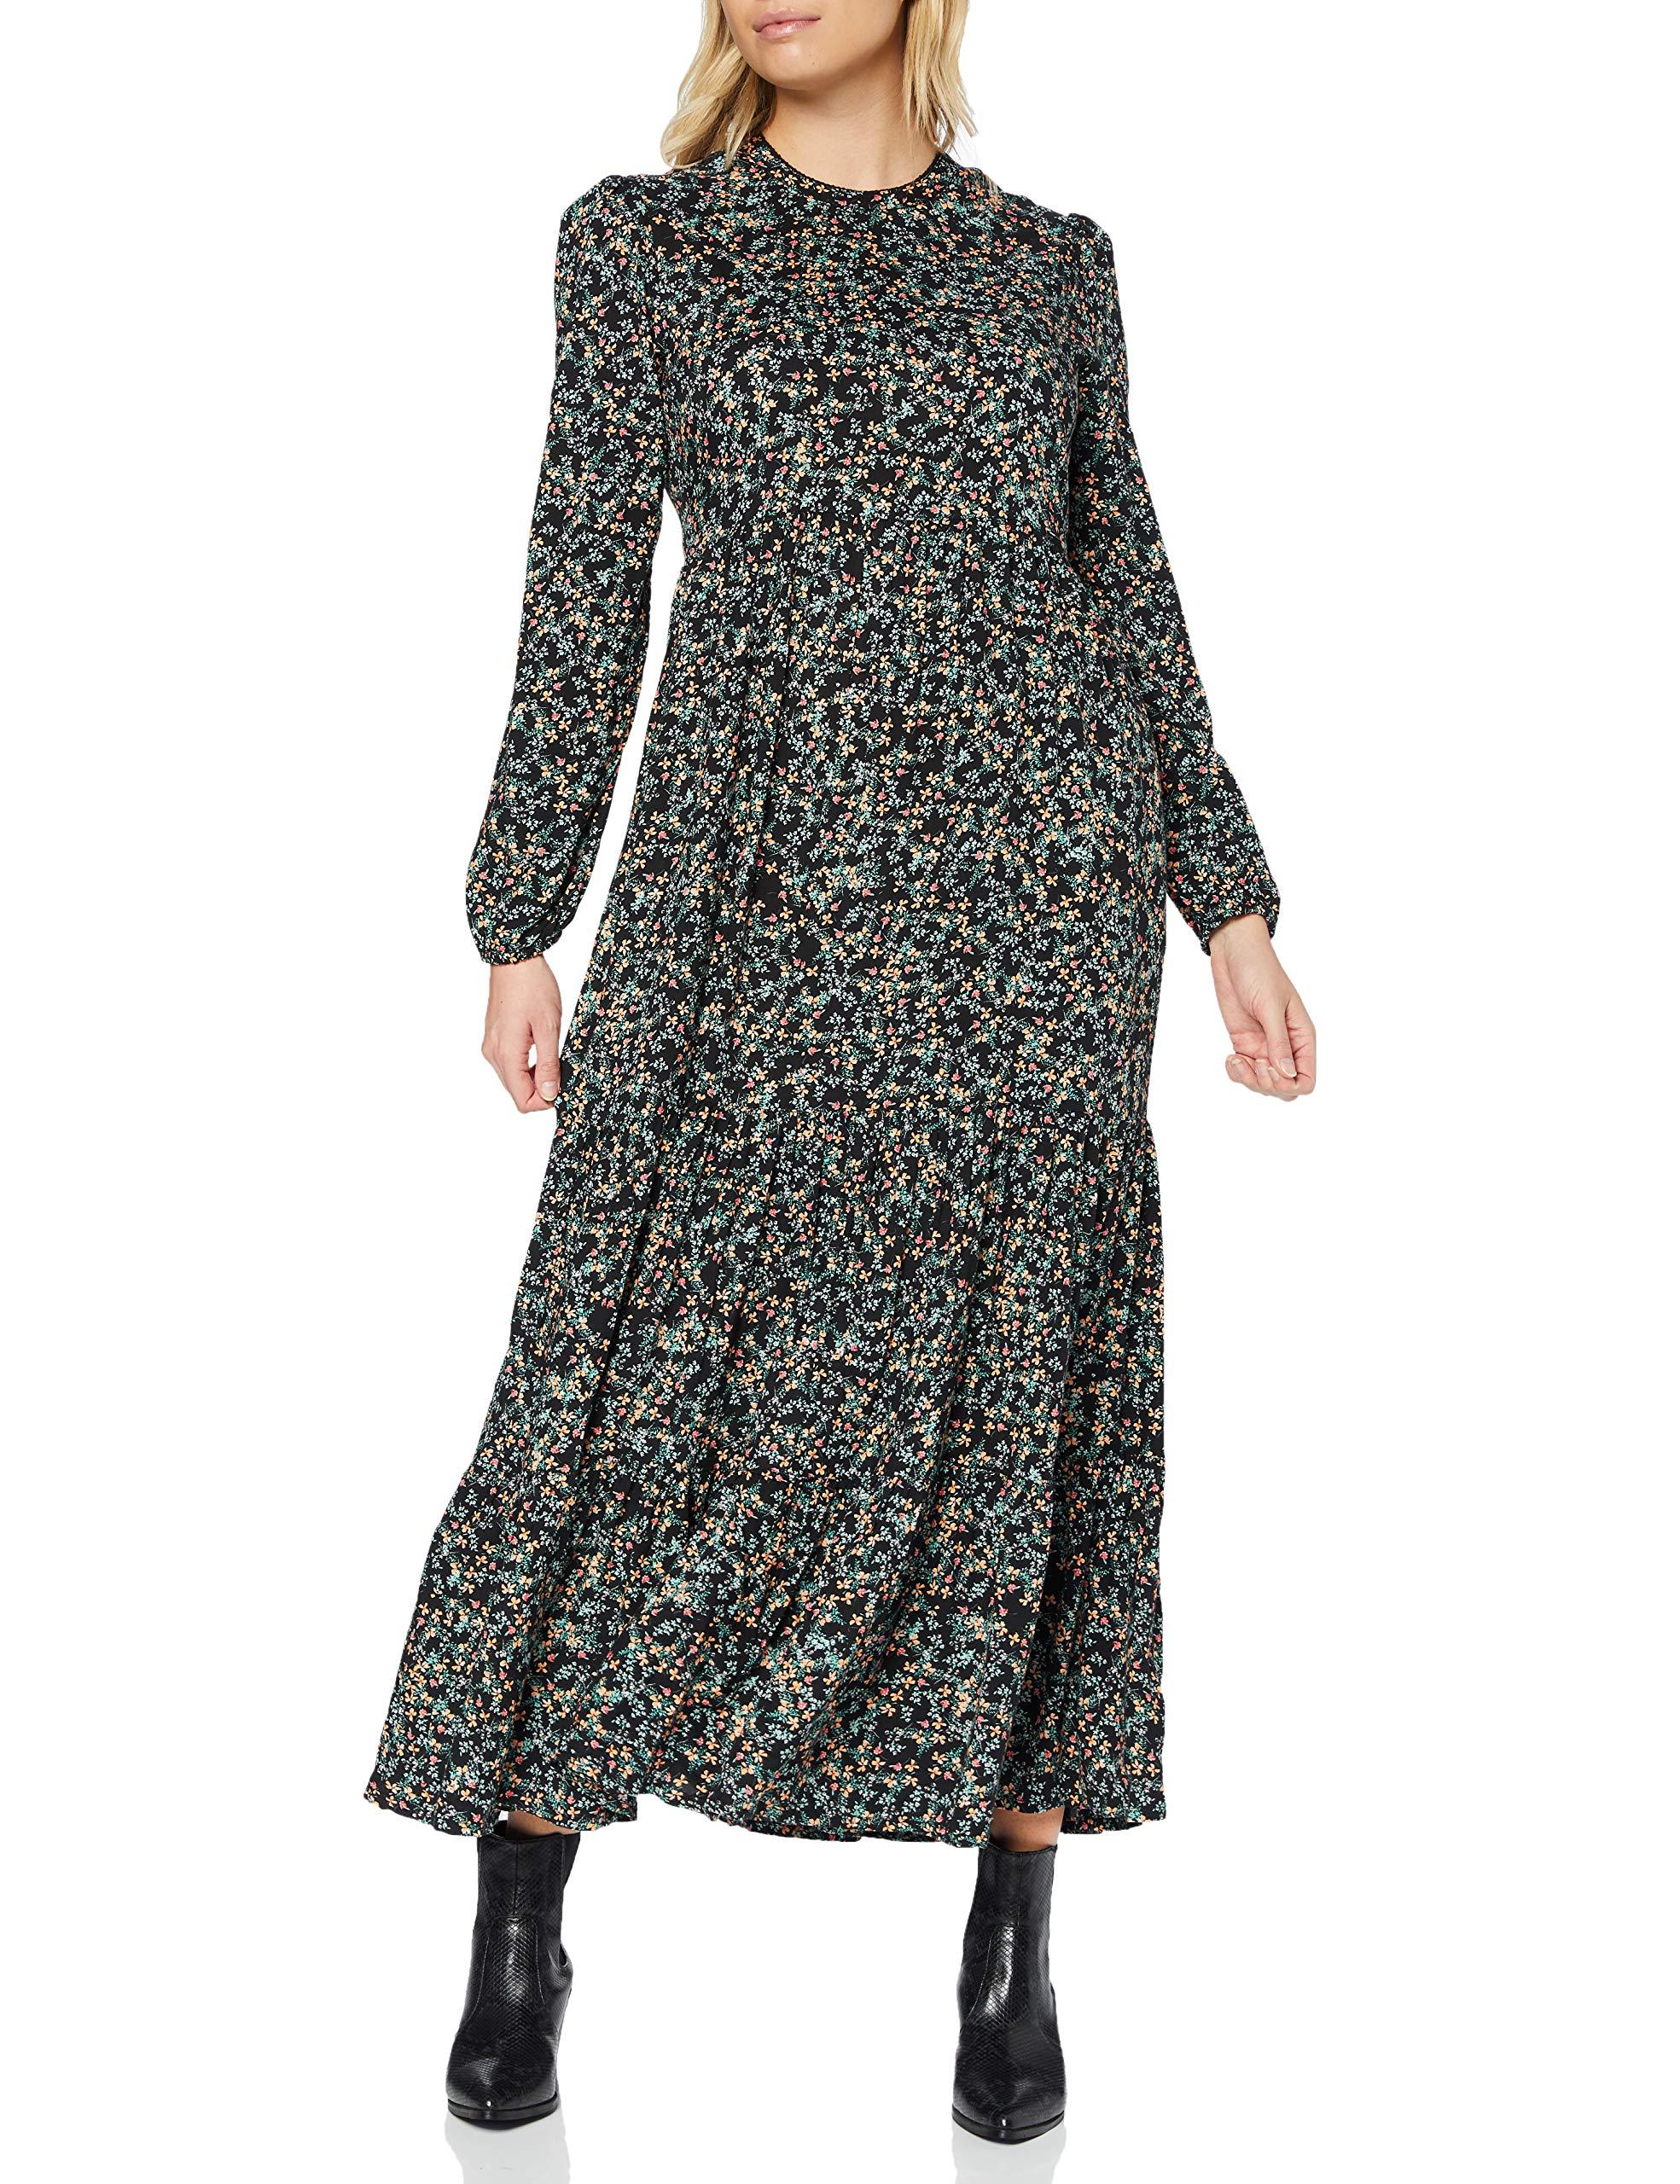 Superdry Skylar Maxi Dress Casual in Leopard Print (Black) - Save 27% - Lyst